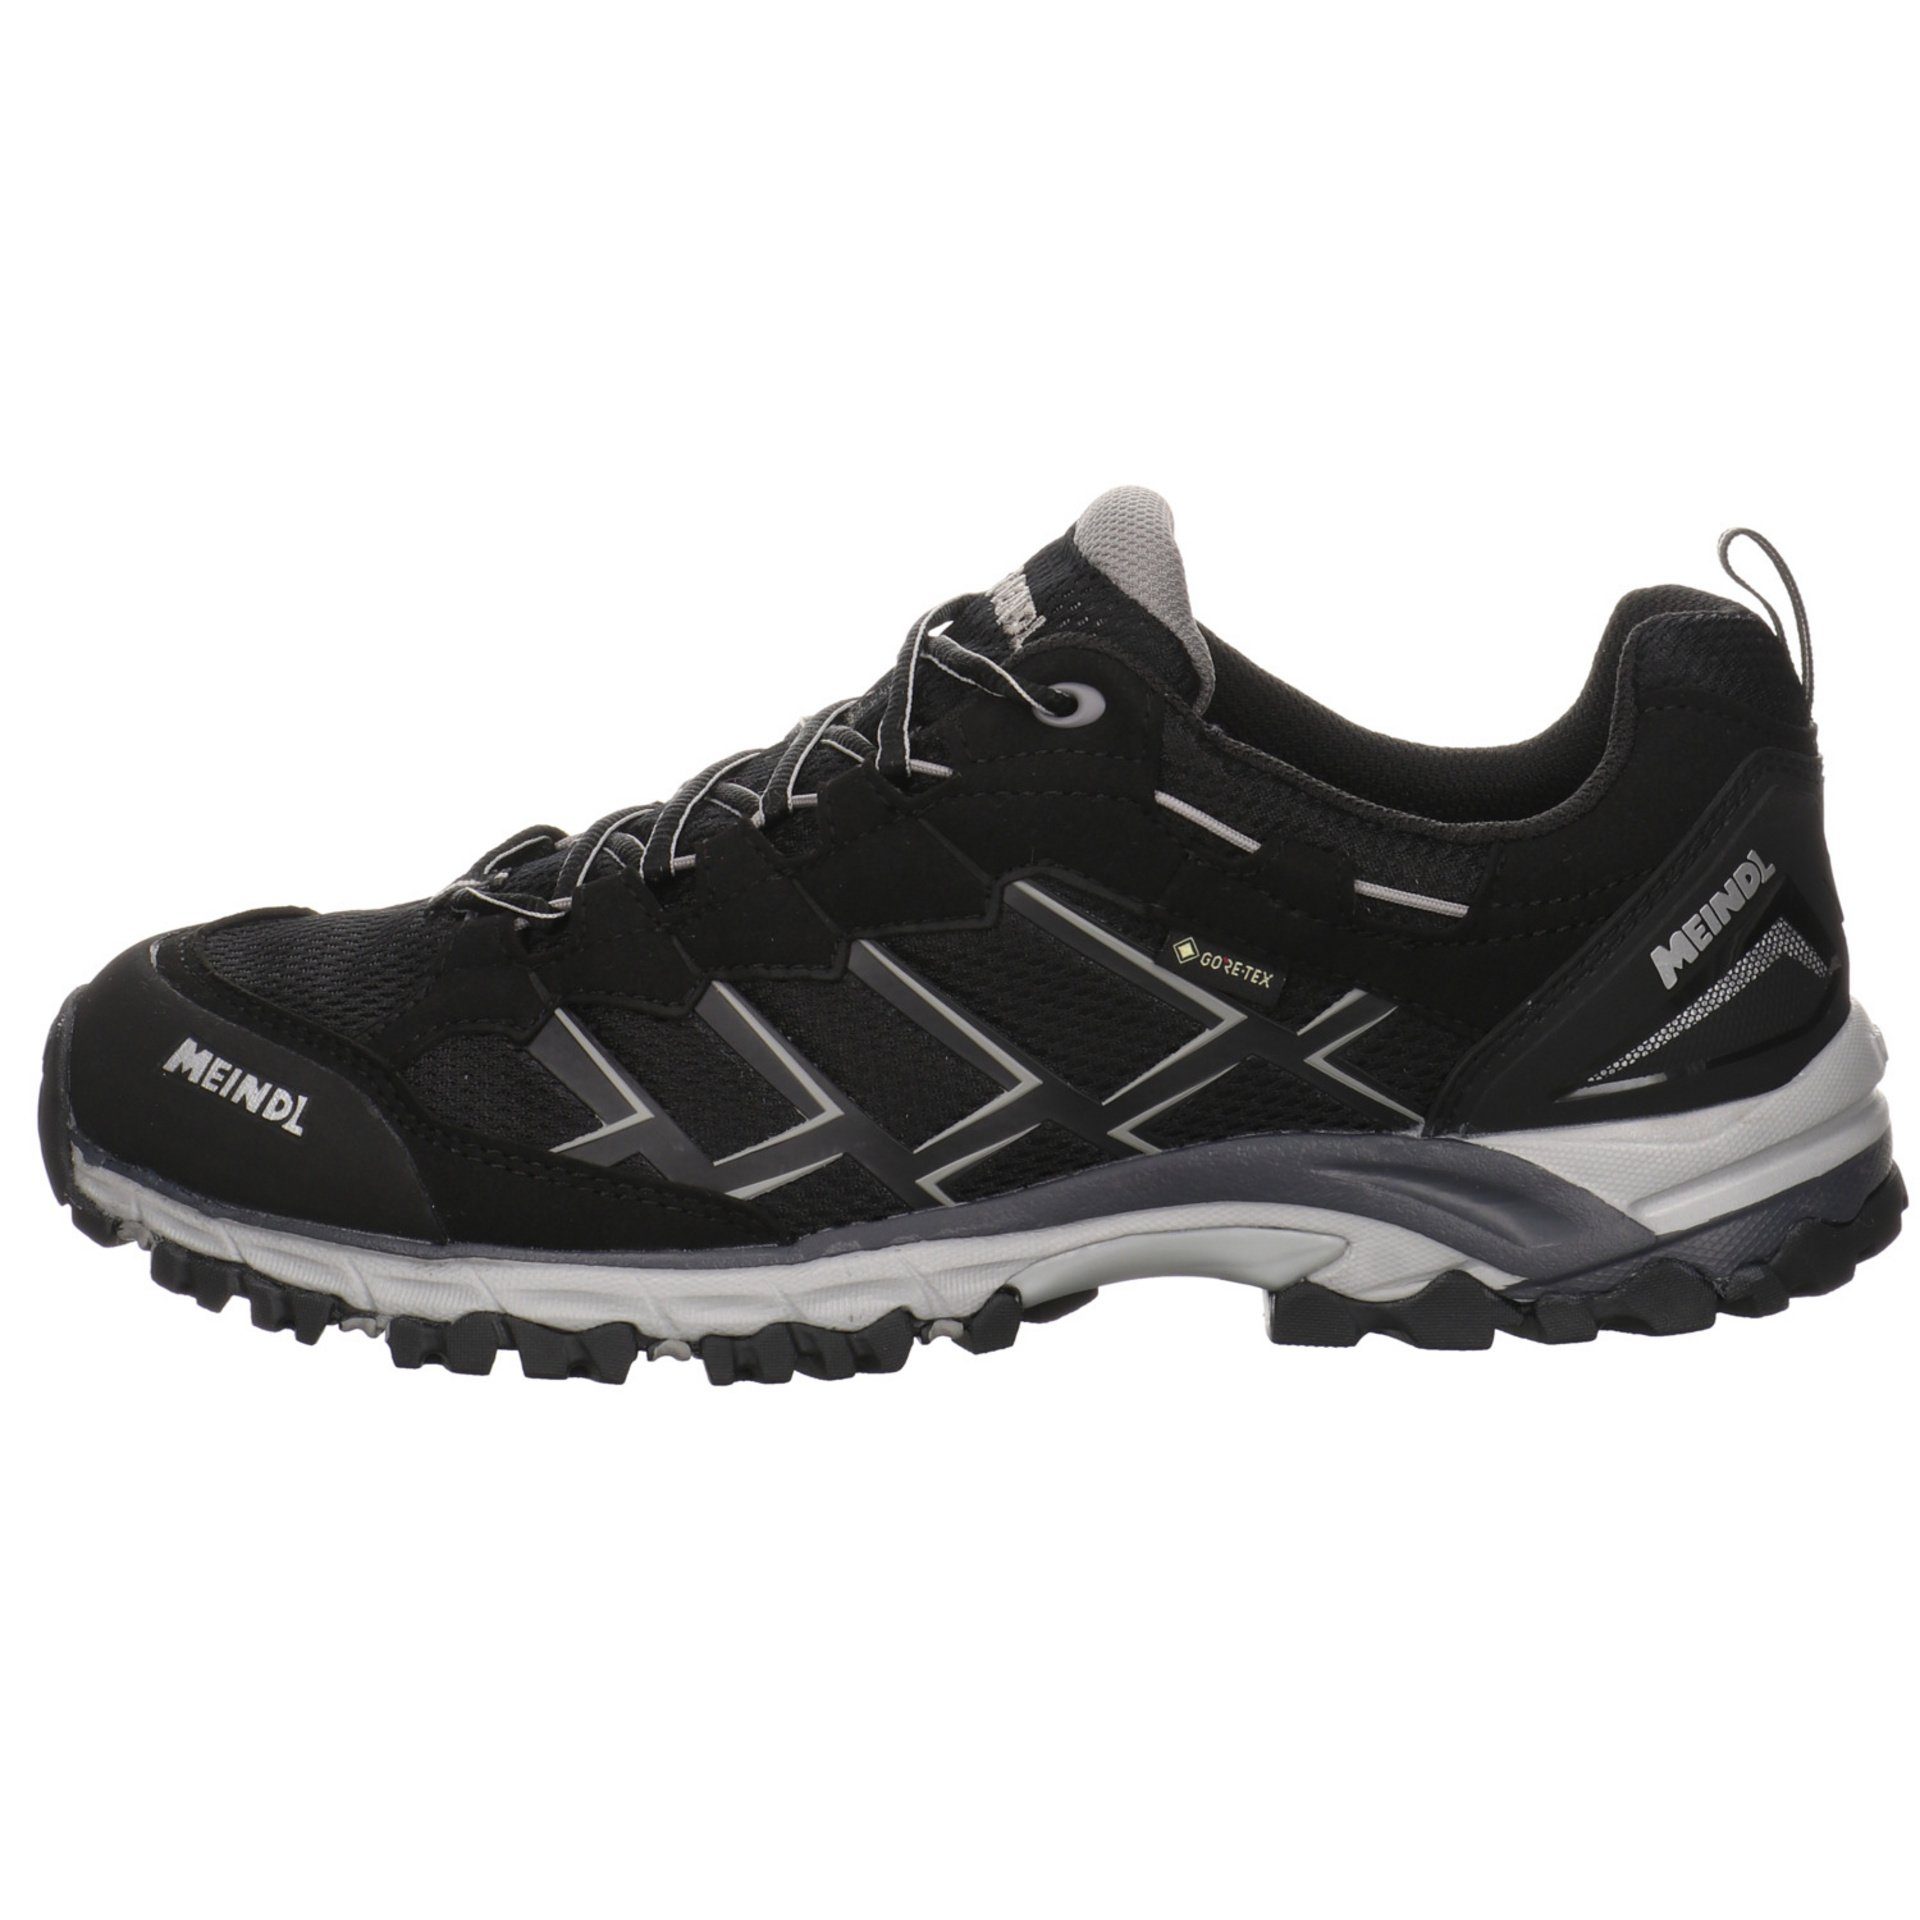 Outdoorschuh black/grey GTX Meindl Outdoorschuh Textil Outdoor Schuhe Caribe Herren